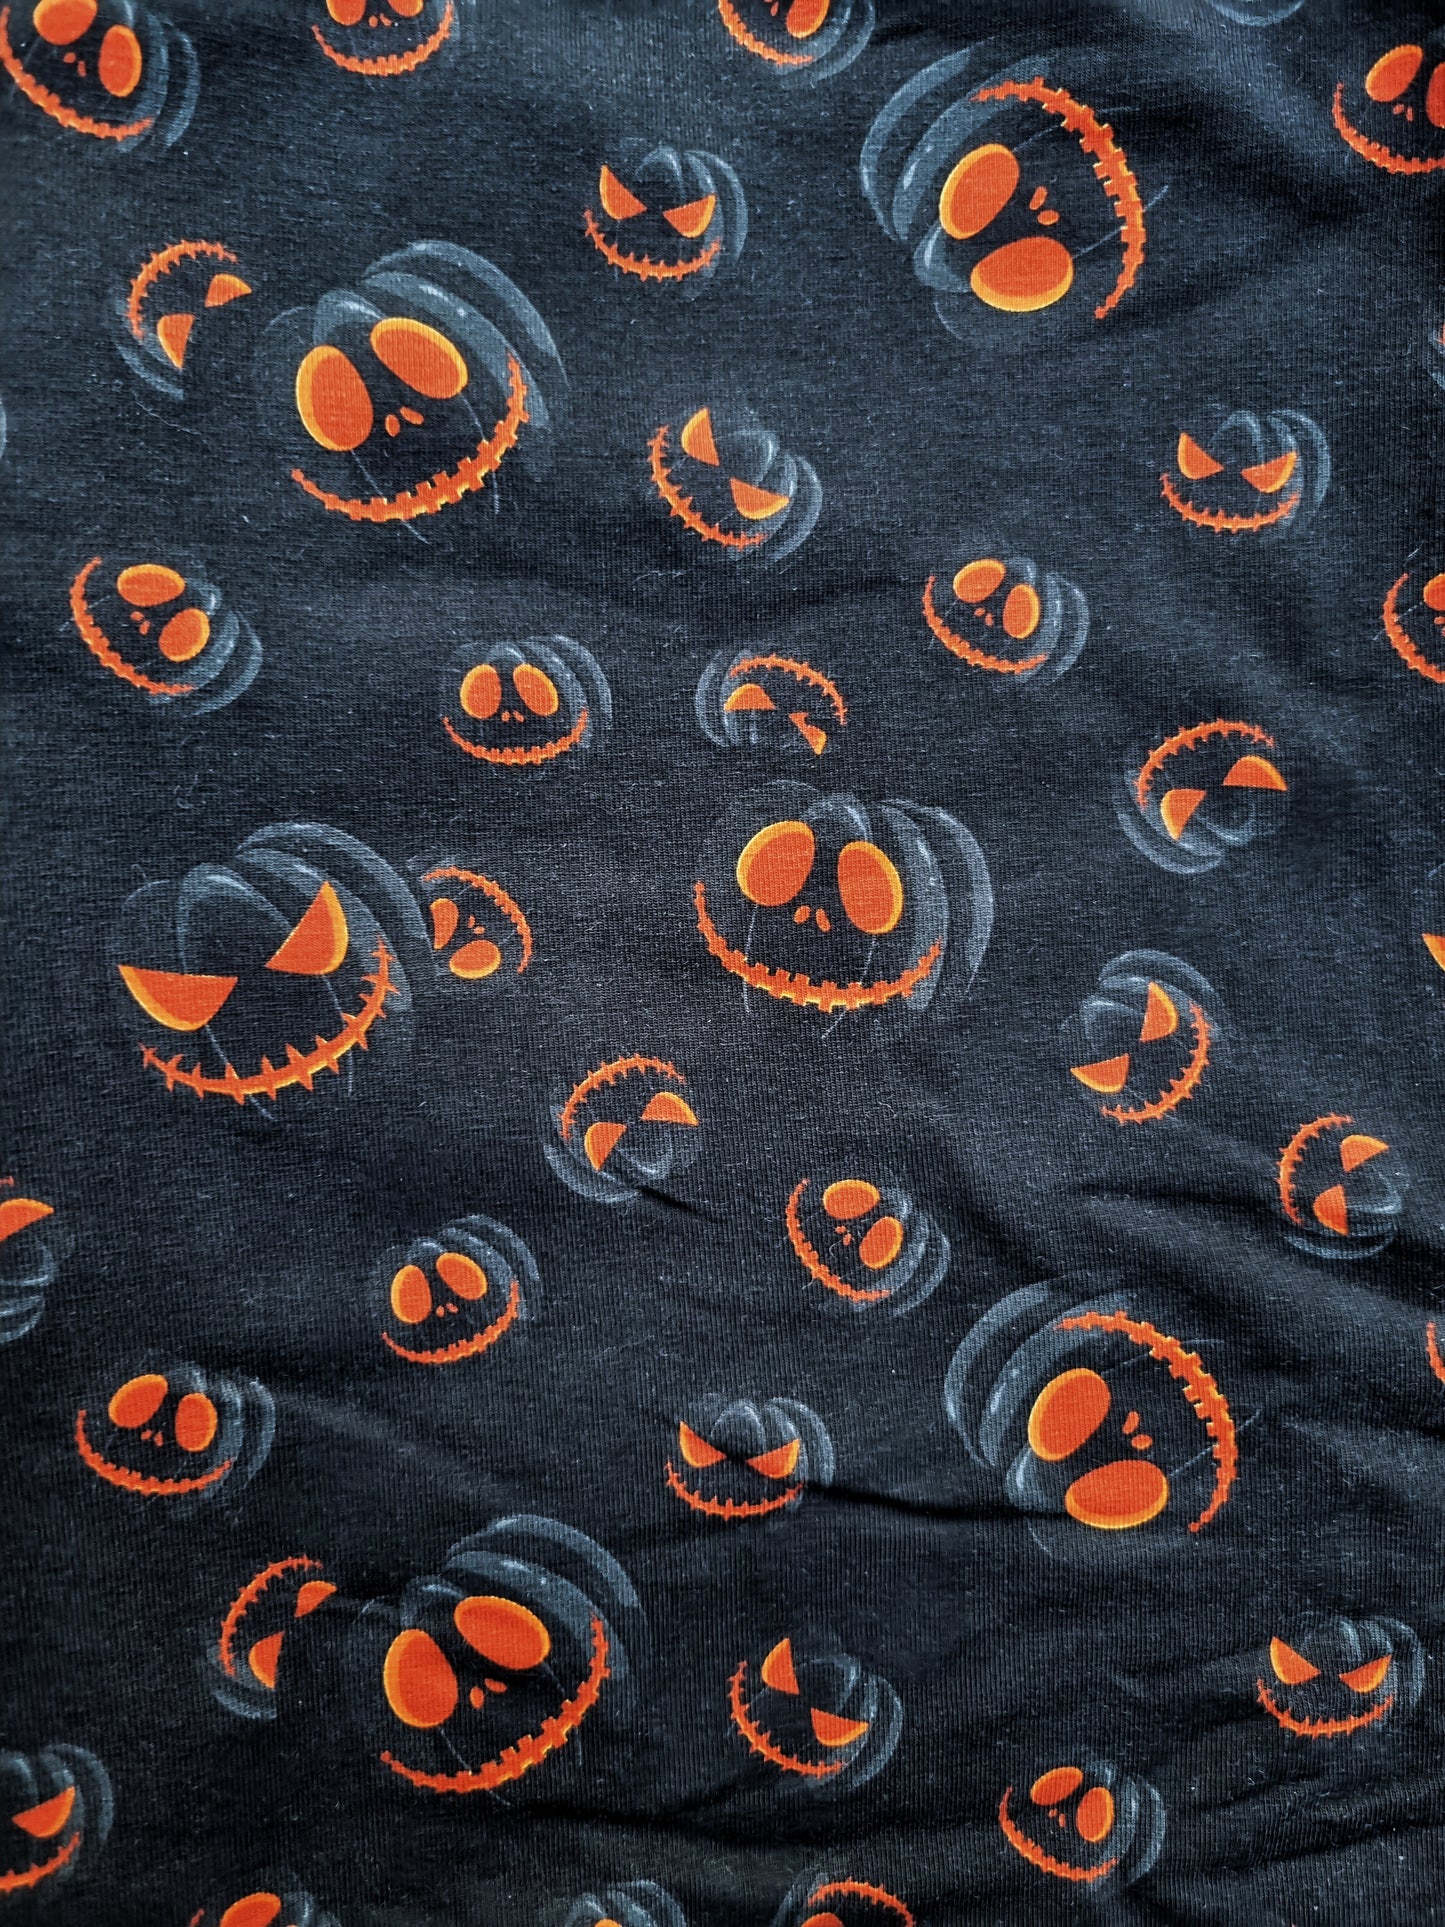 Black and Orange Pumpkins - Made to Order - Super Comfy Undies